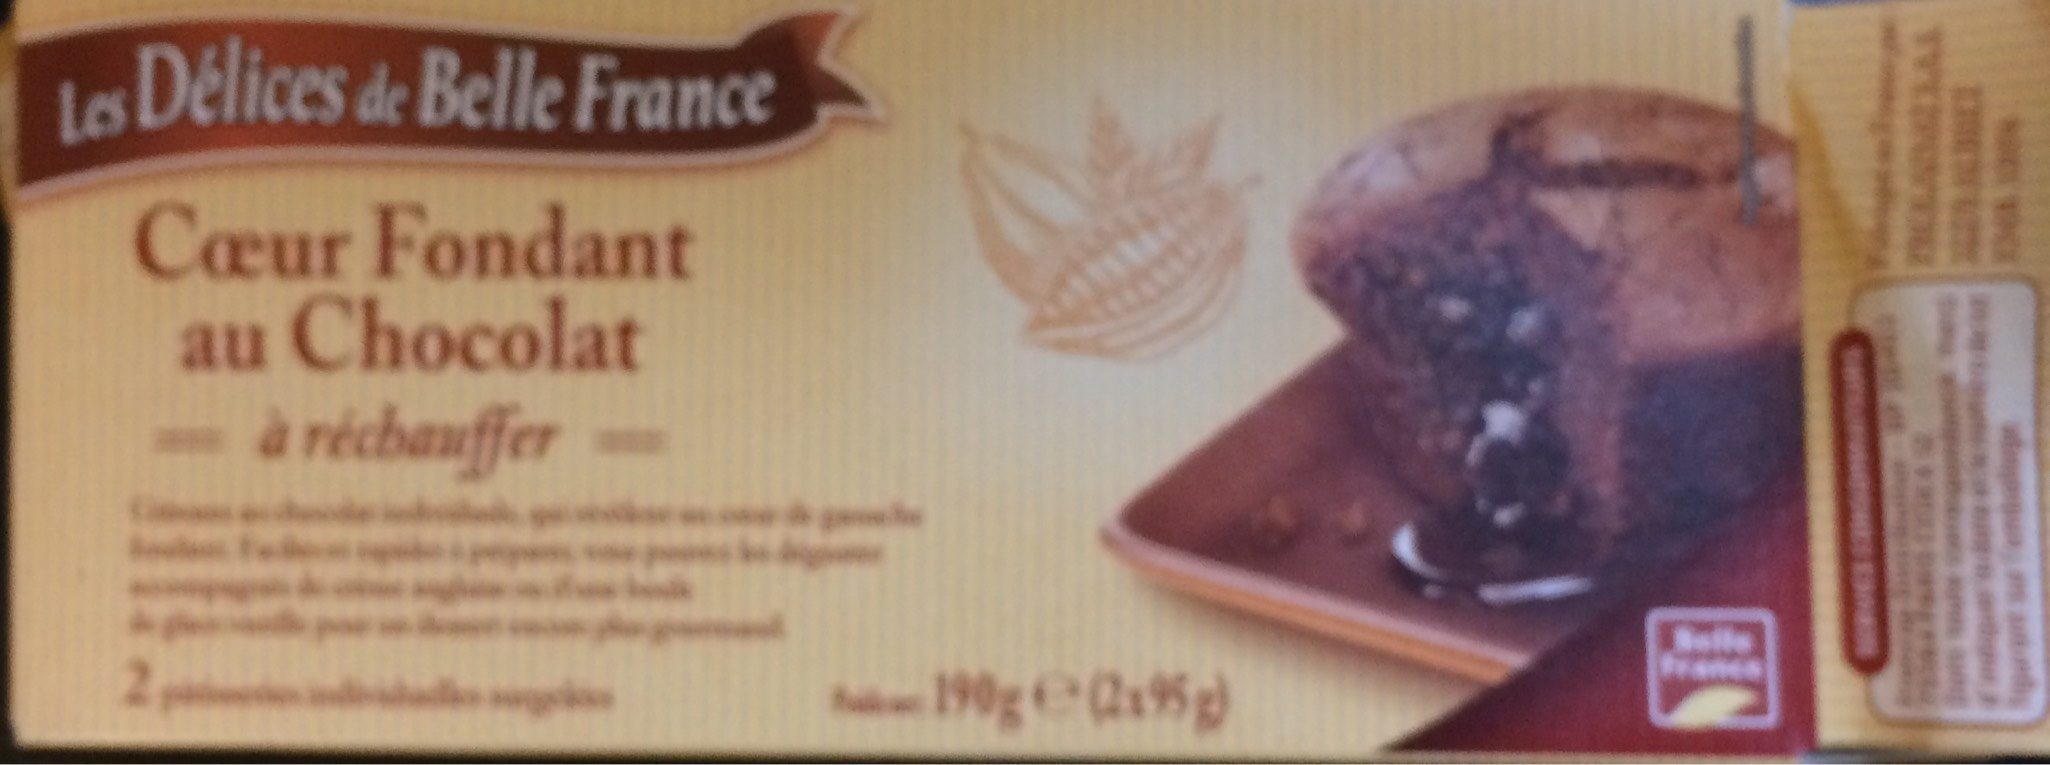 Coeur Fondant au Chocolat - Product - fr